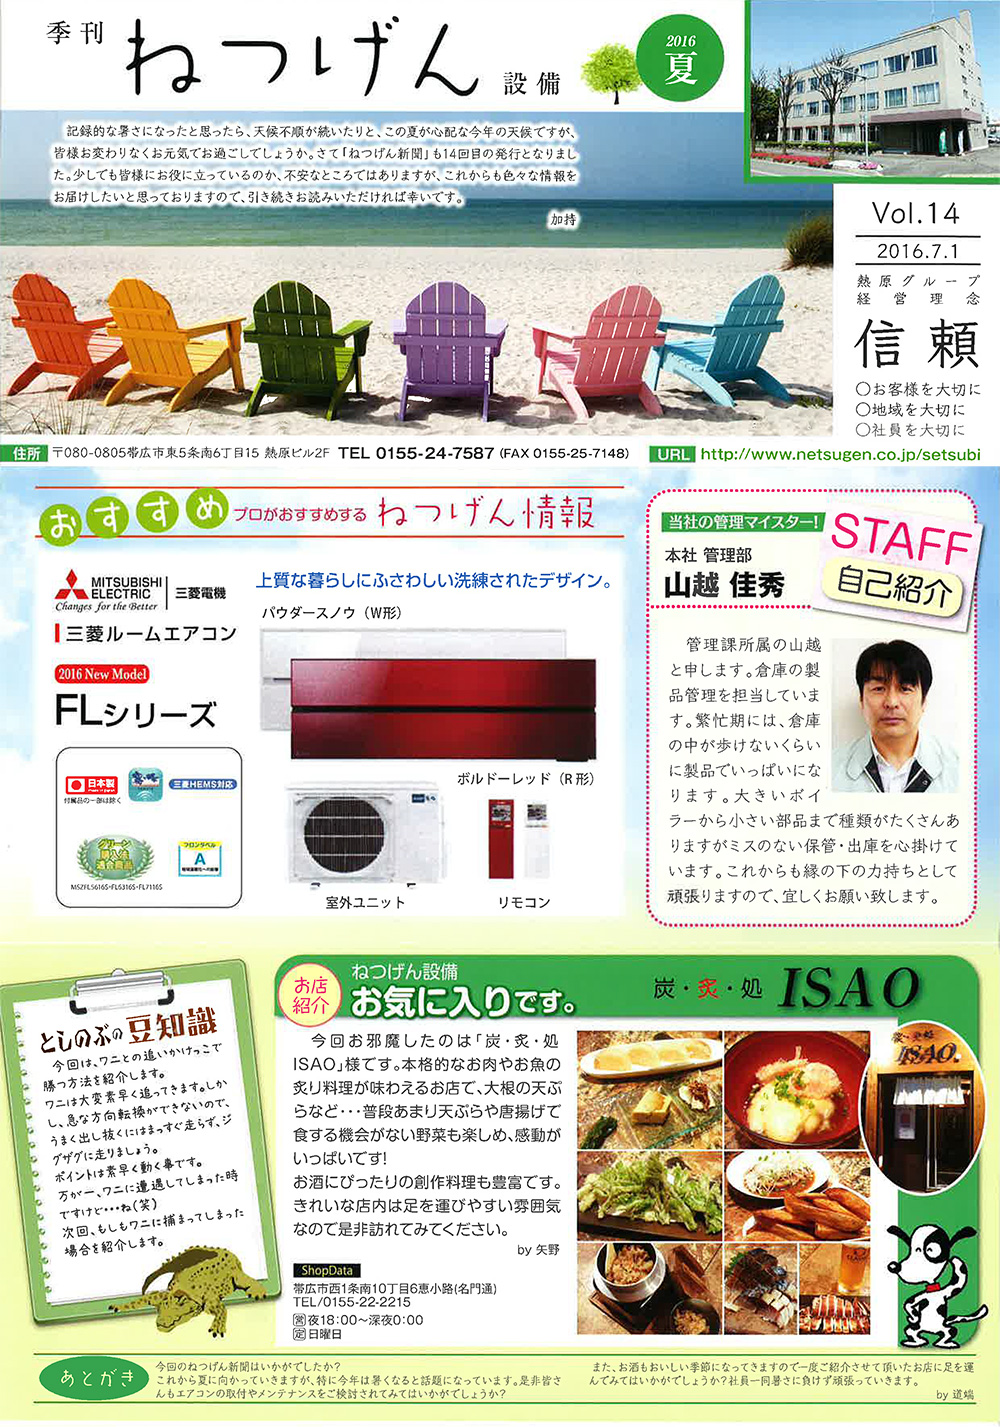 http://www.netsugen.co.jp/setsubi/information/images/160701kikan.jpg